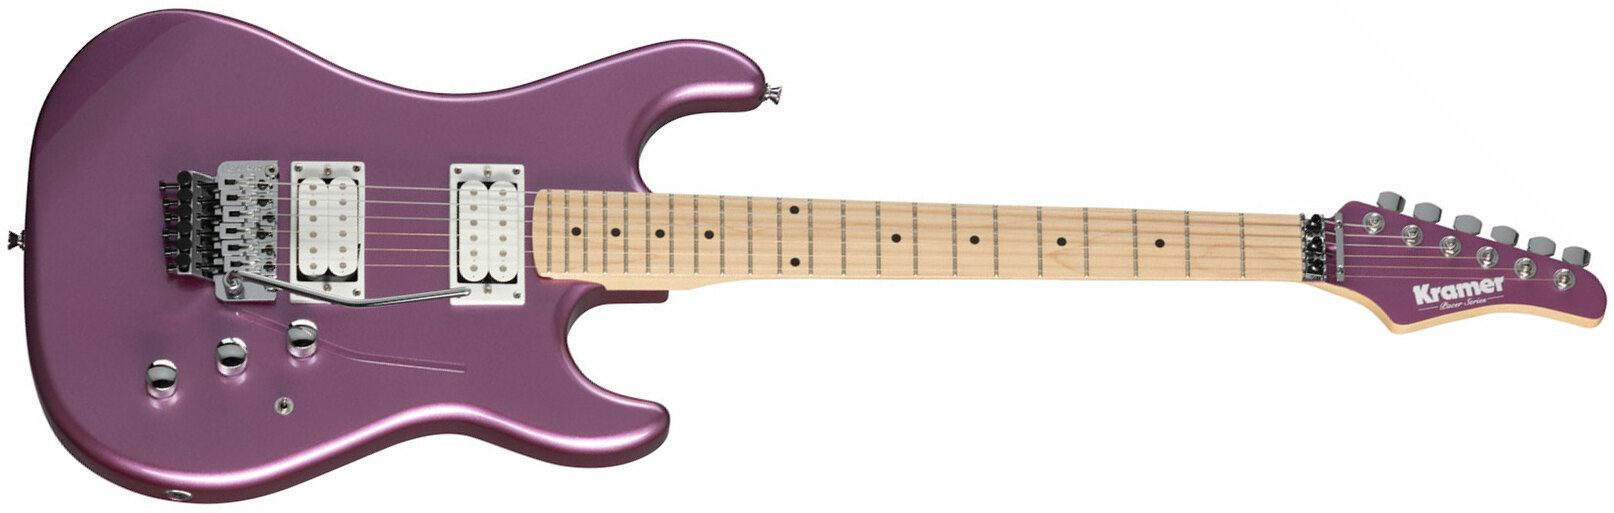 Kramer Pacer Classic 2h Fr Mn - Purple Passion Metallic - E-Gitarre in Str-Form - Main picture